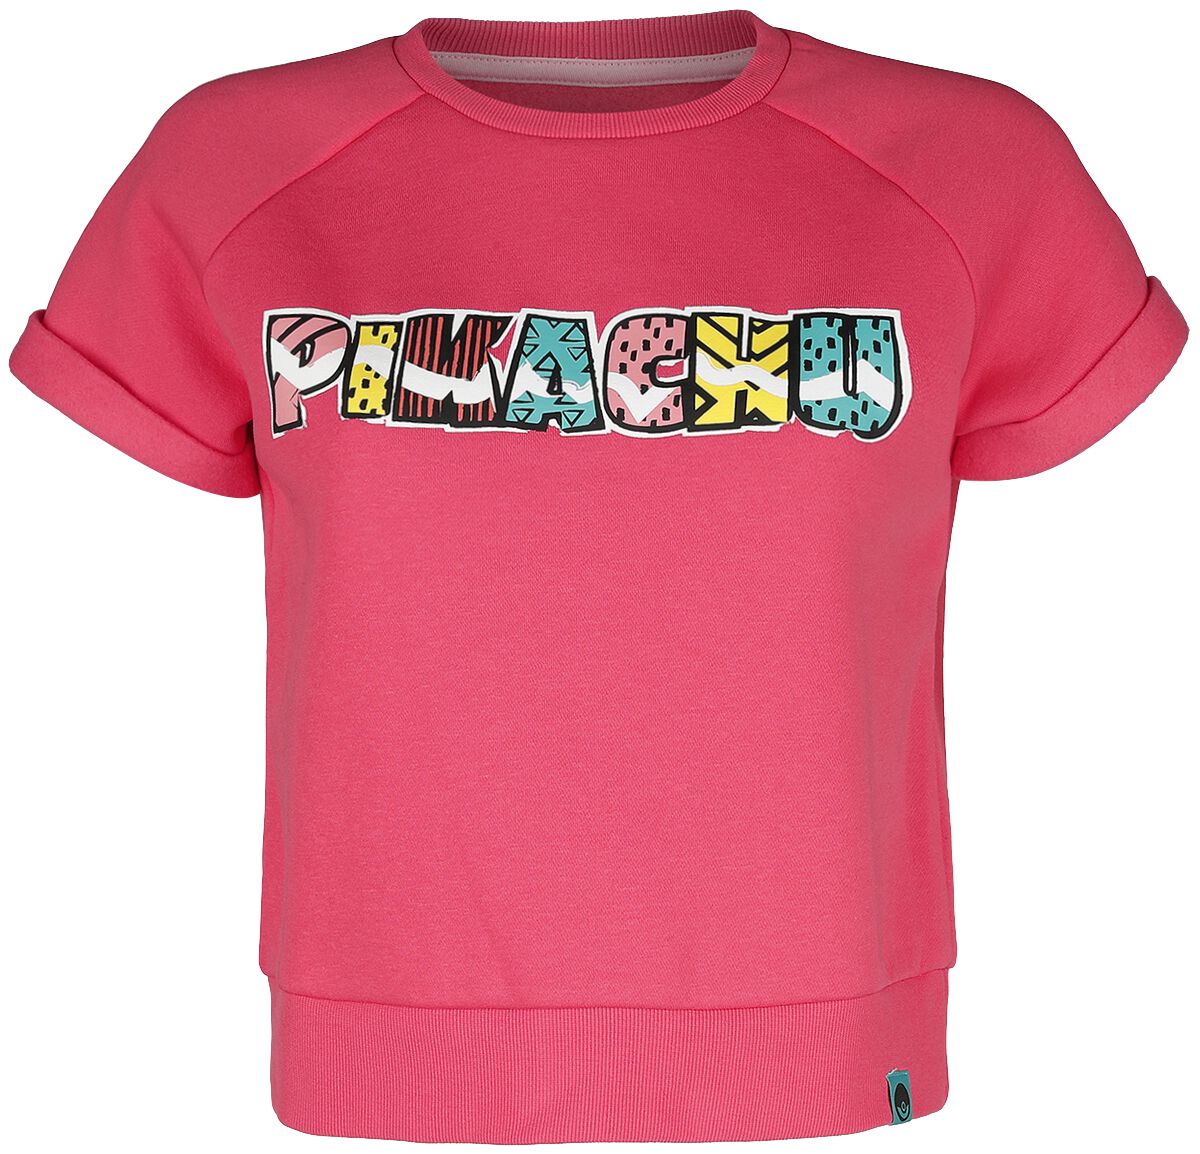 Pokémon - Pikachu - Retro Summer - T-Shirt - pink - EMP Exklusiv!